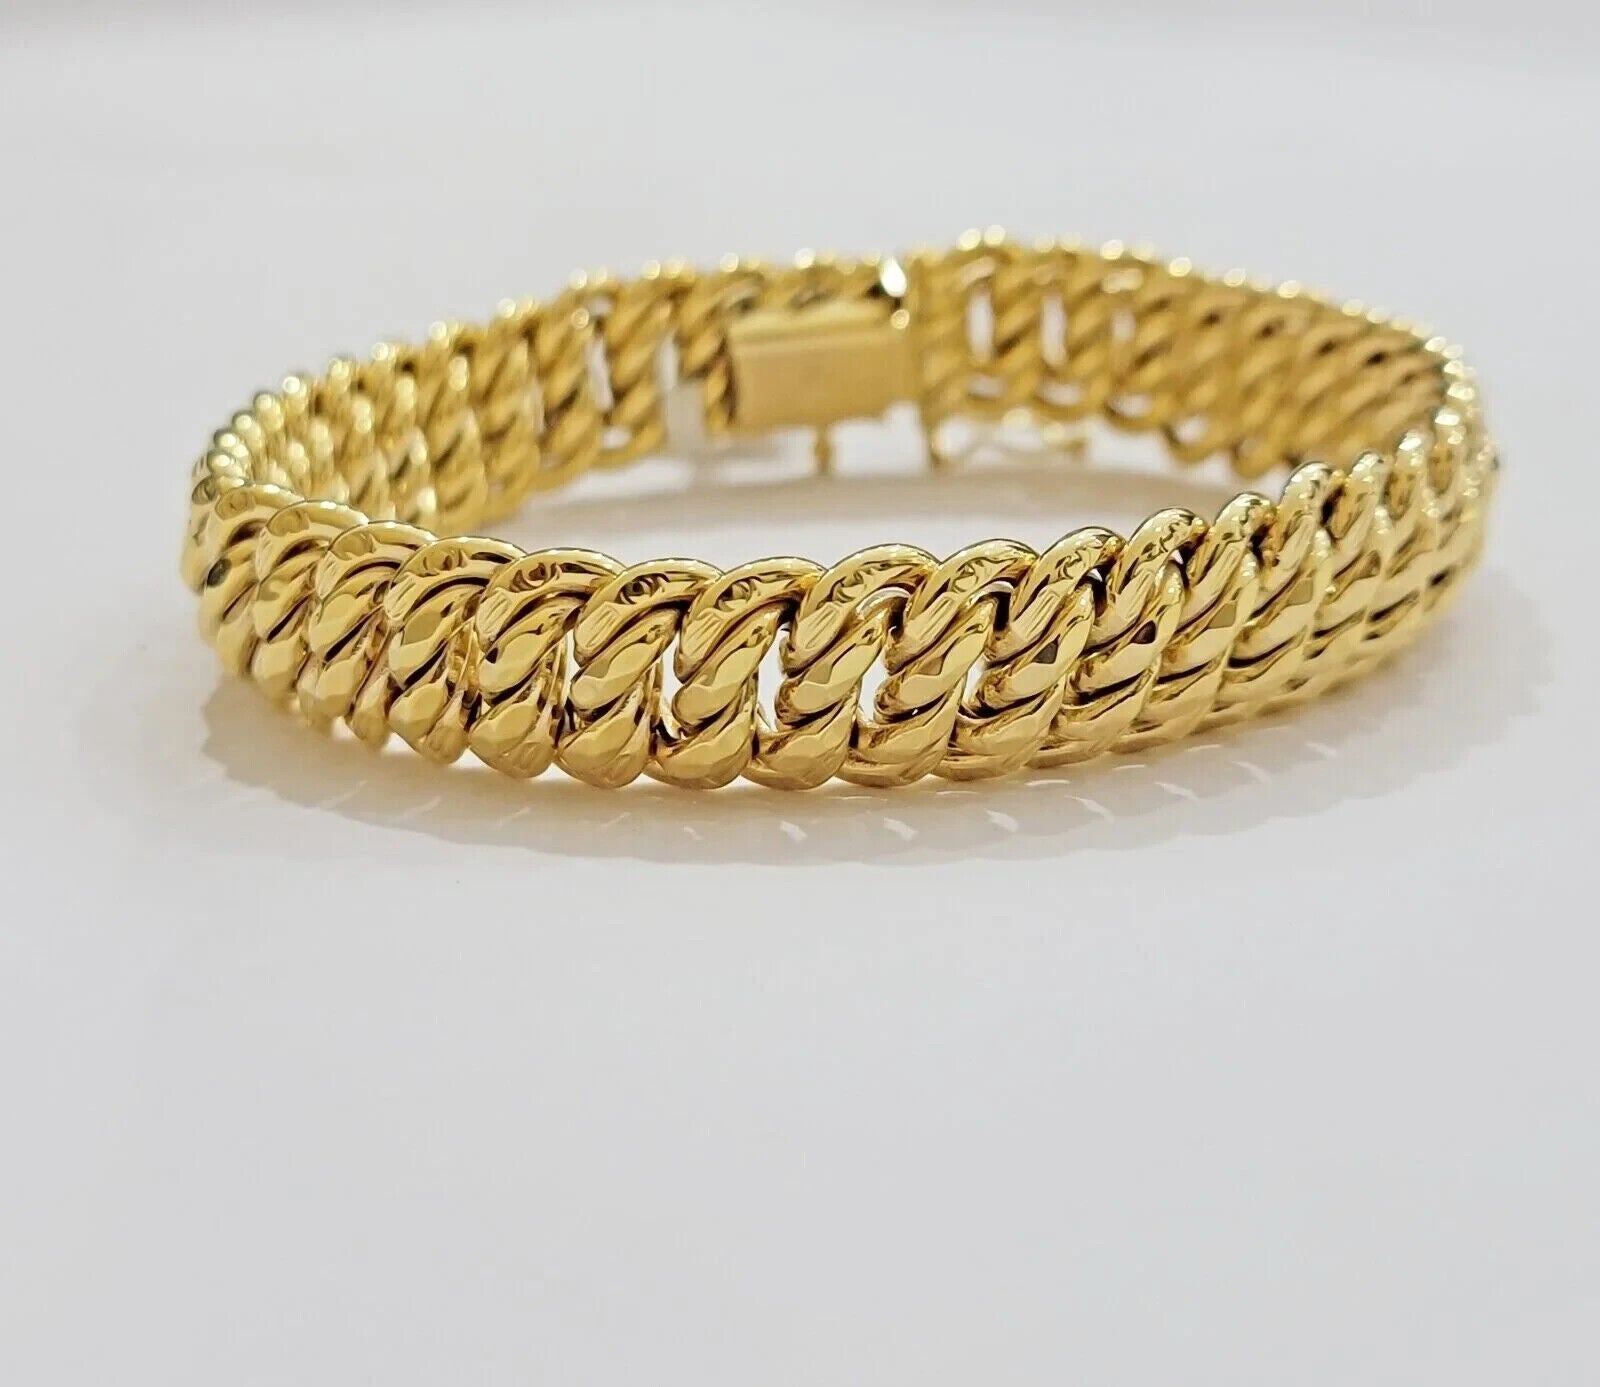 Gold Chain Bracelet, Thick Chain Bracelet, 3mm 5mm Chain Bracelet, Cuban  Chain Link Bracelet, Jewelry for Men and Women, Statement Bracelet - Etsy | Gold  bracelet chain, Chain link bracelet, Chain bracelet